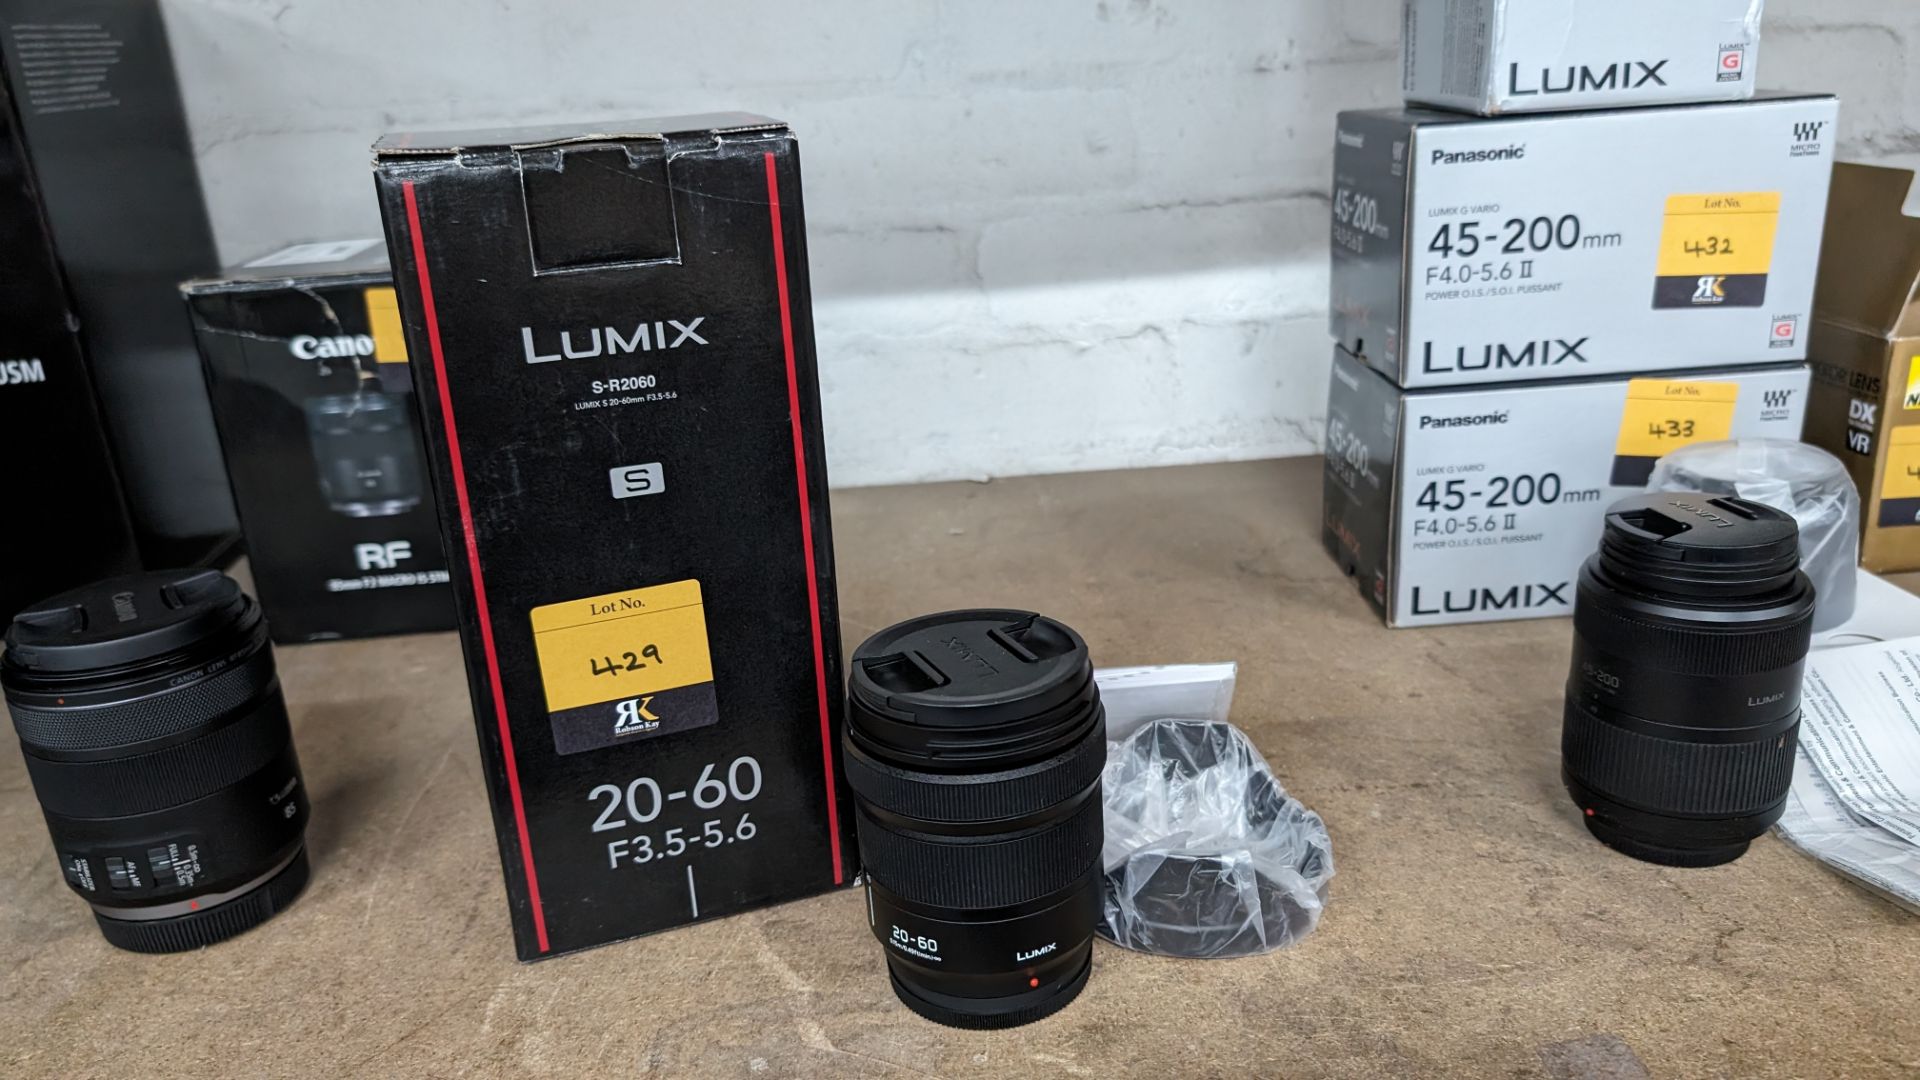 Panasonic Lumix model S-R2060 lens, 20-60mm, f3.5-5.6 - Bild 2 aus 14